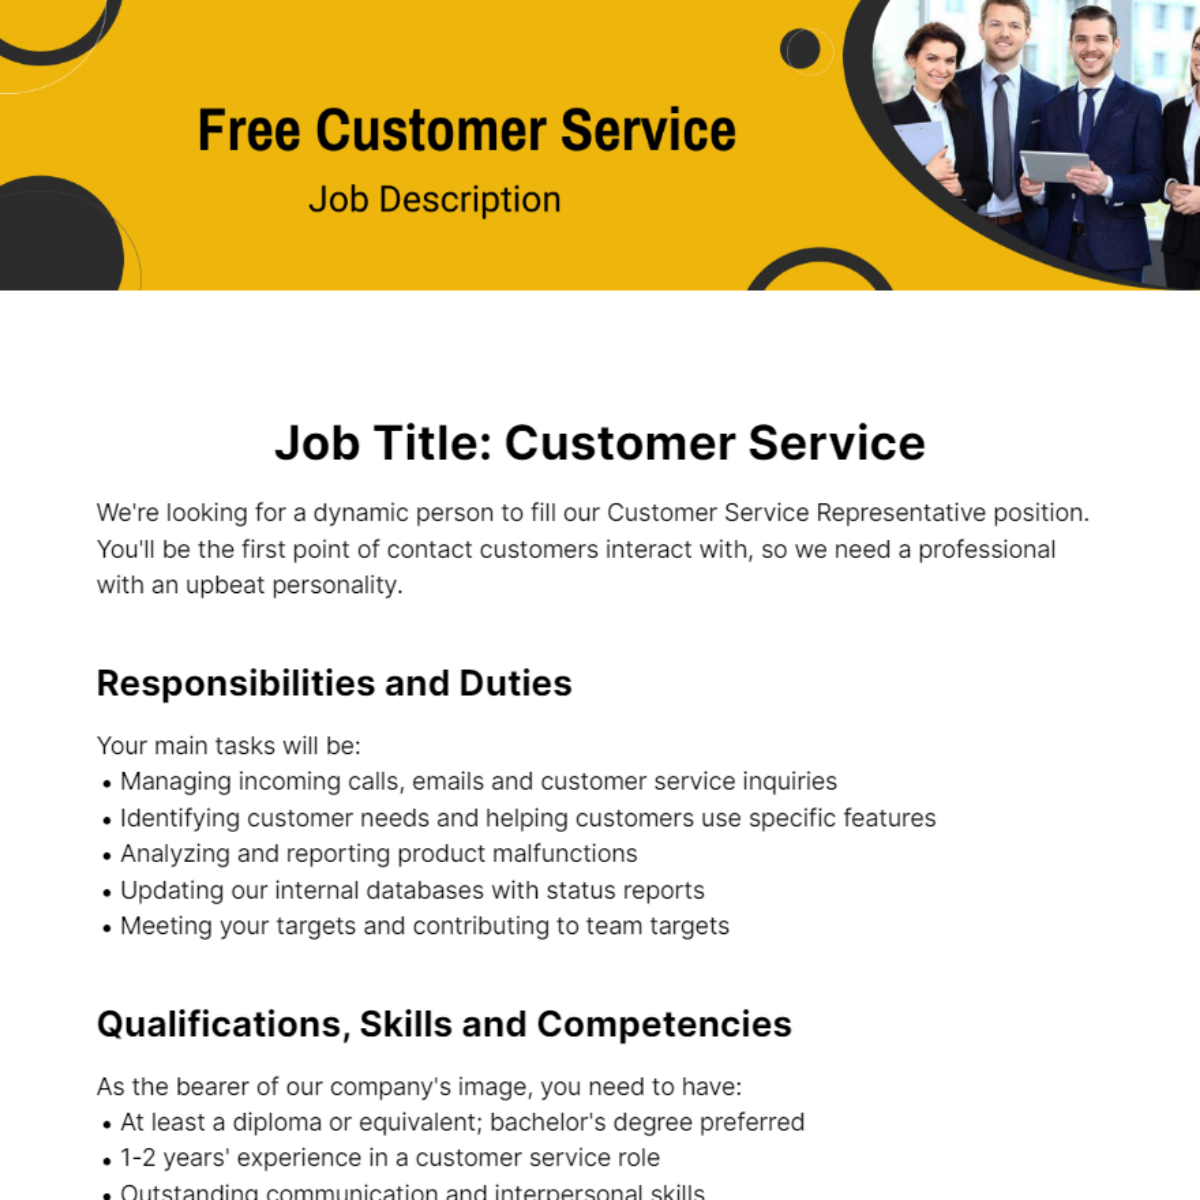 Free Customer Service Job Description Template